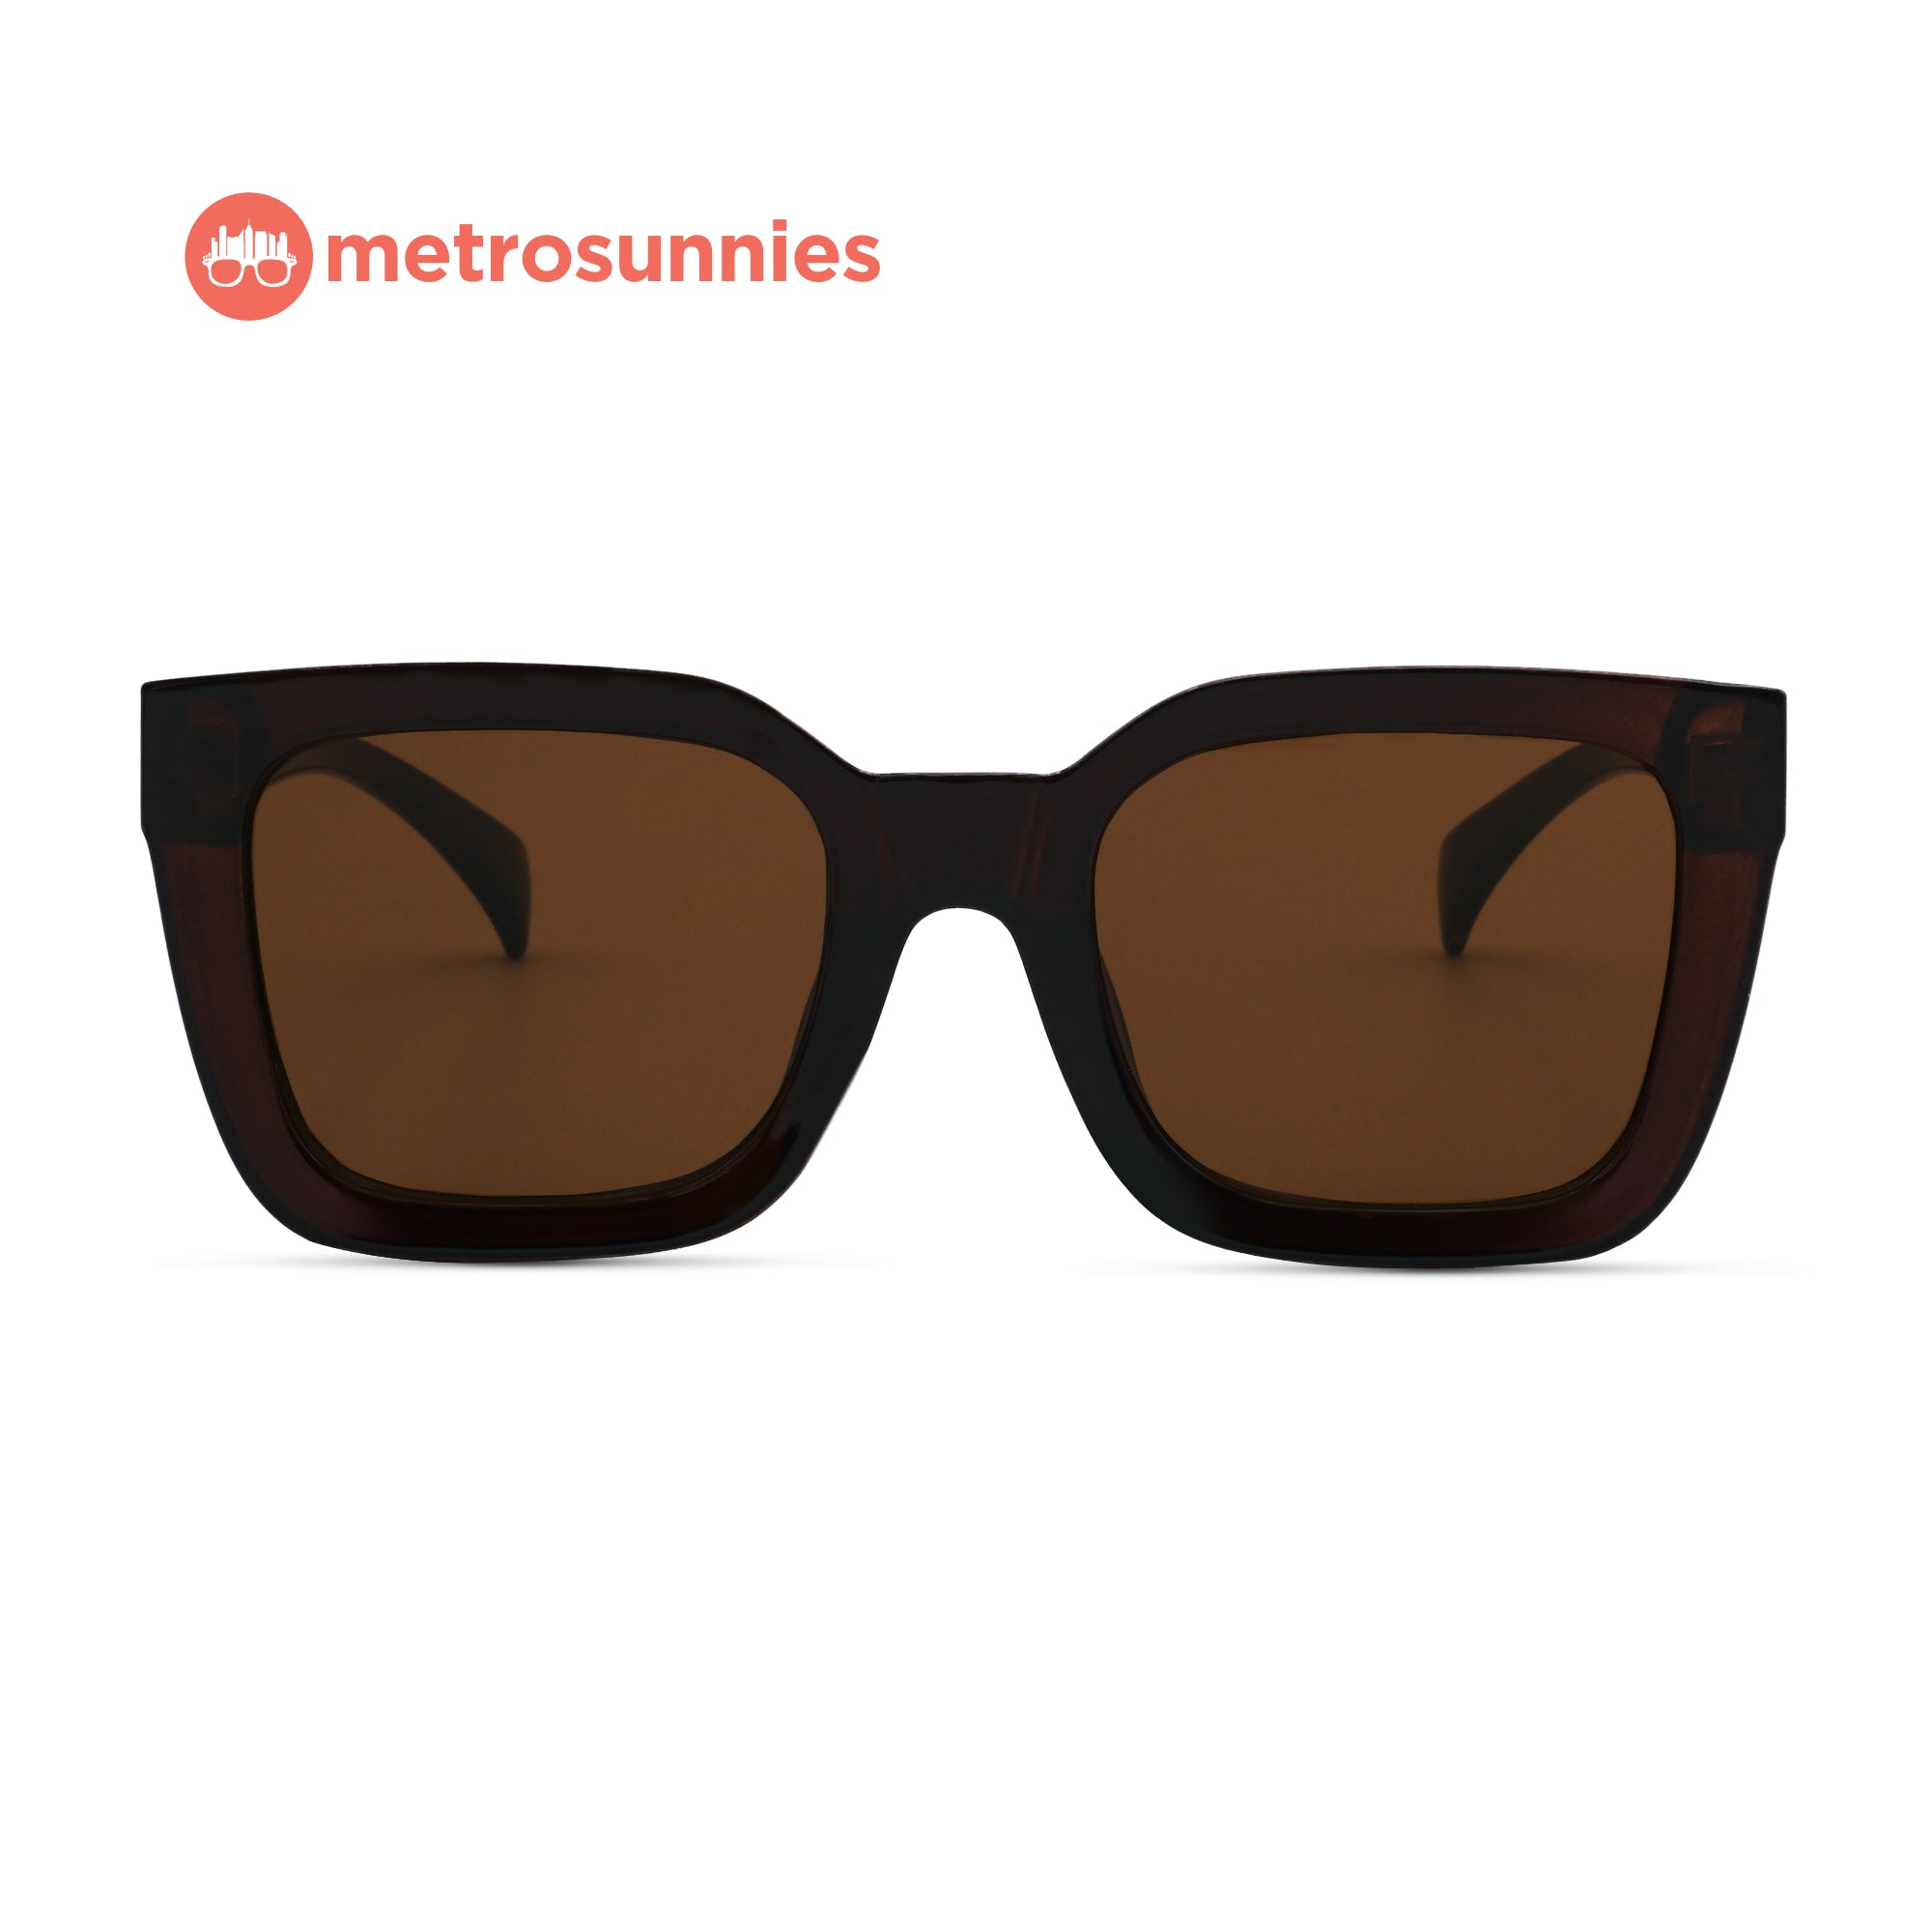 MetroSunnies Eve Sunnies (Brown) / Sunglasses with UV400 Protection / Fashion Eyewear Unisex